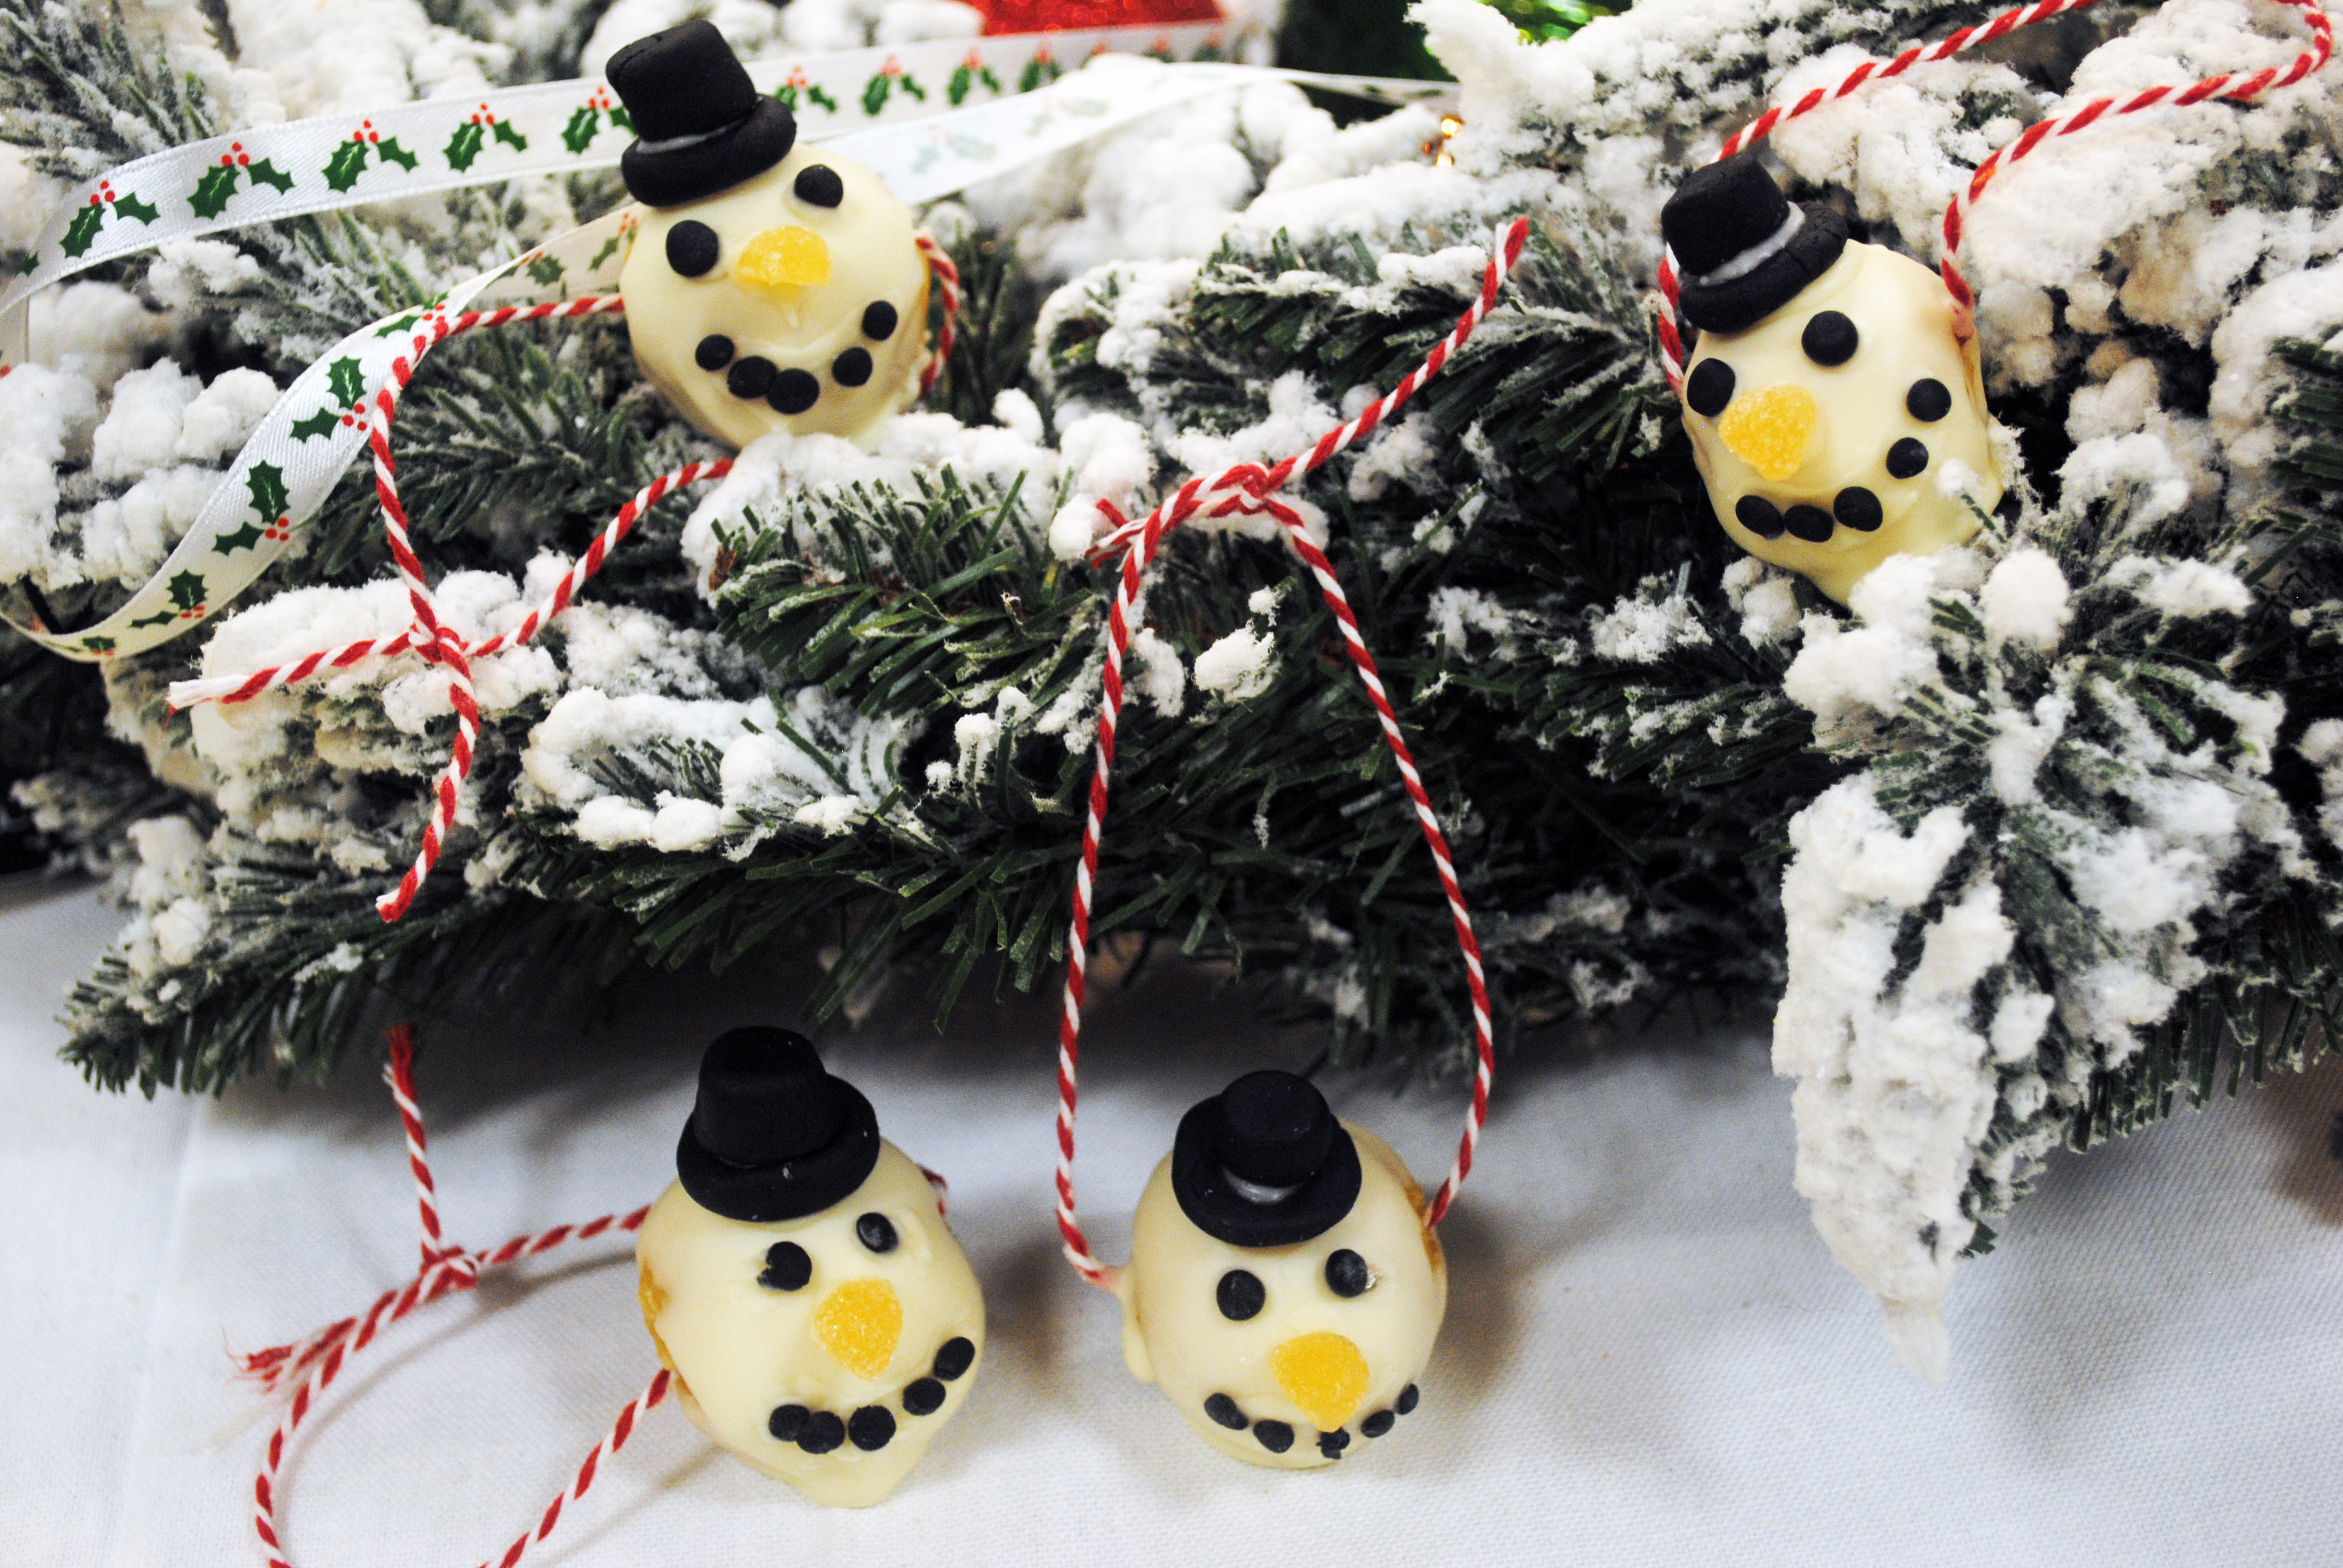 Snowman cake pop decorations - goodtoknow